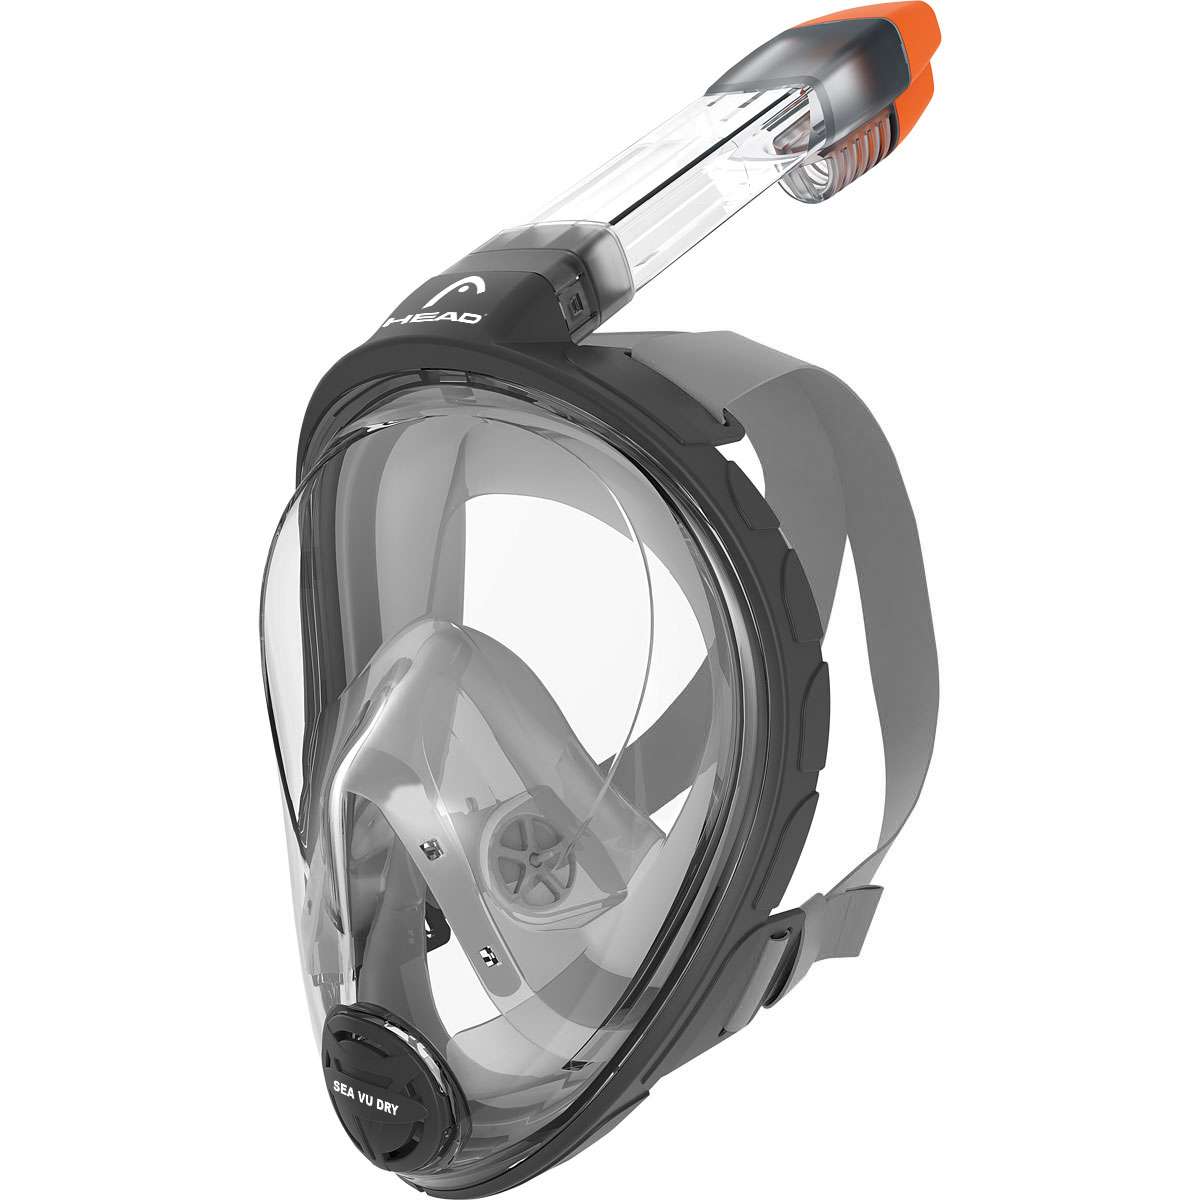 BK-LXL Head Mares Sea Vu Dry Full Face Snorkeling Mask Lot Of 12 